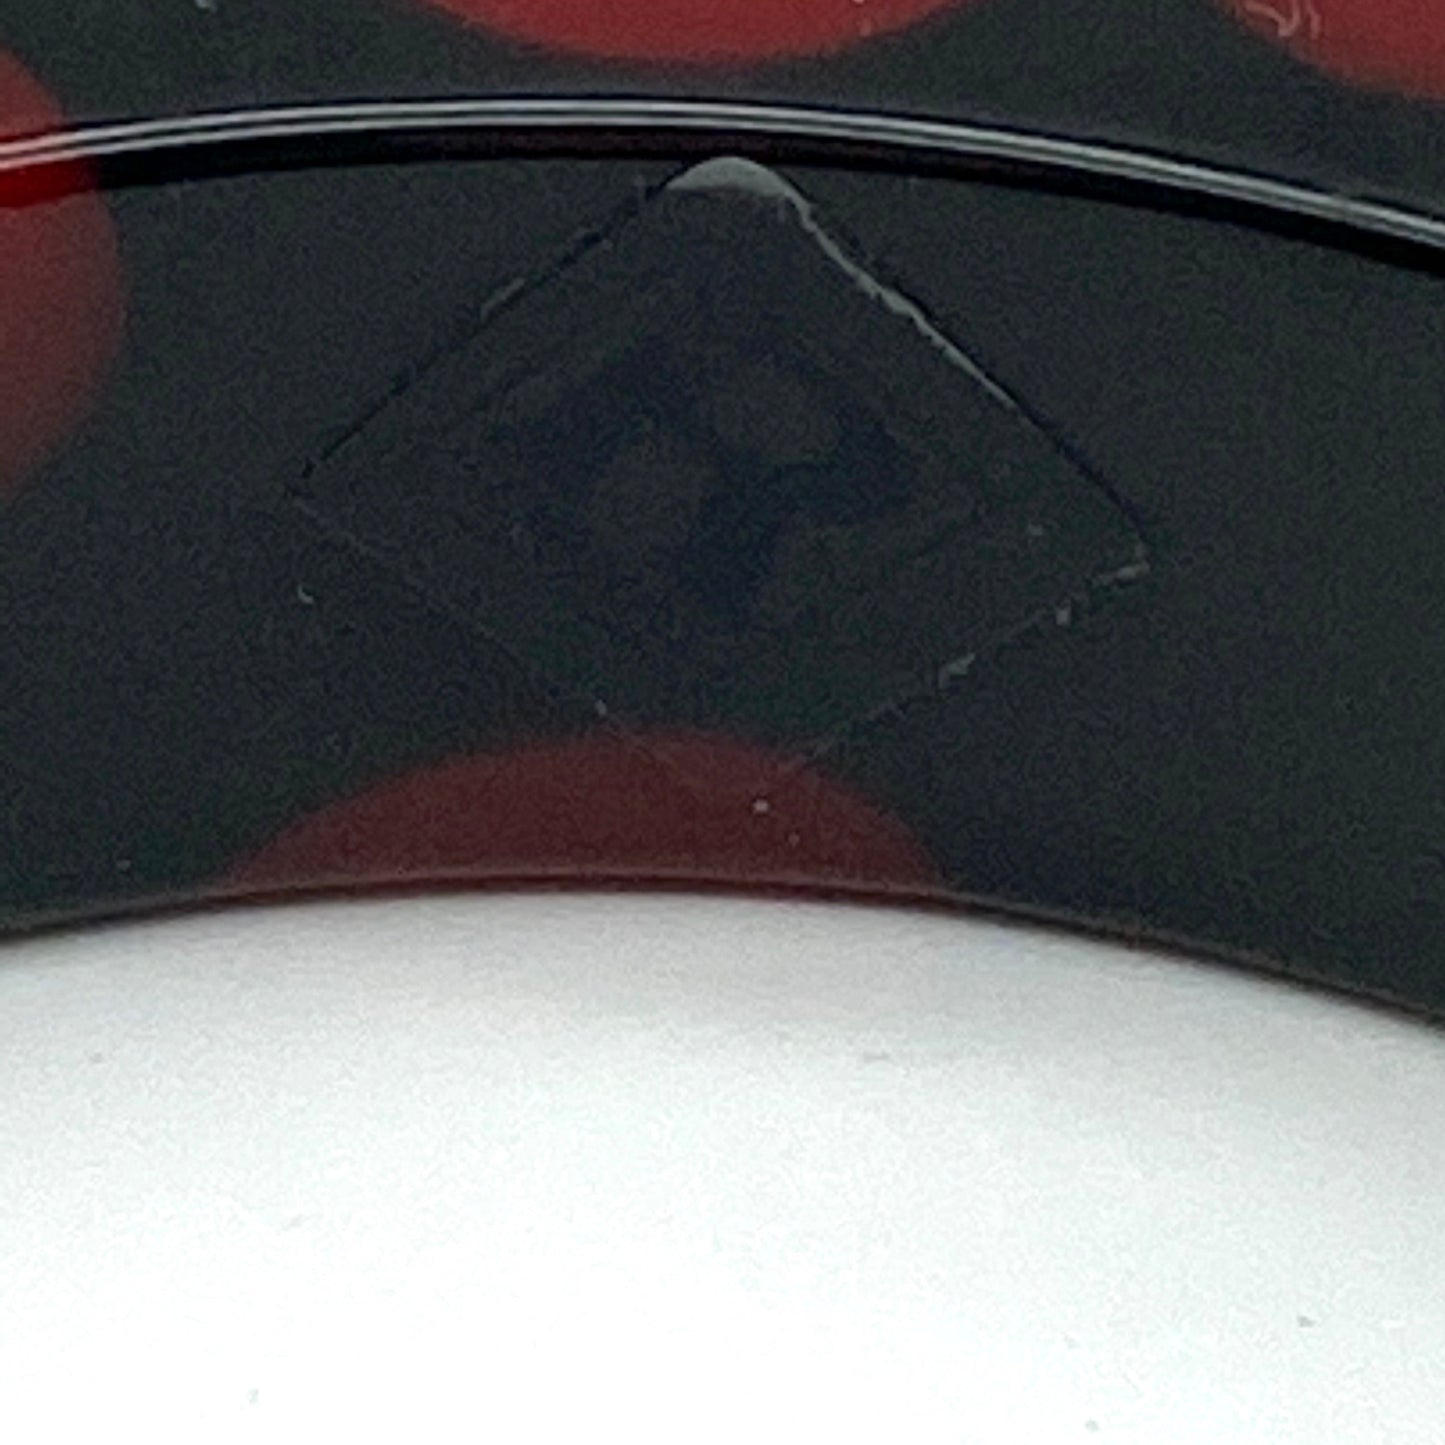 Sobral Black/Red Polka Dot Bangle with Sticker